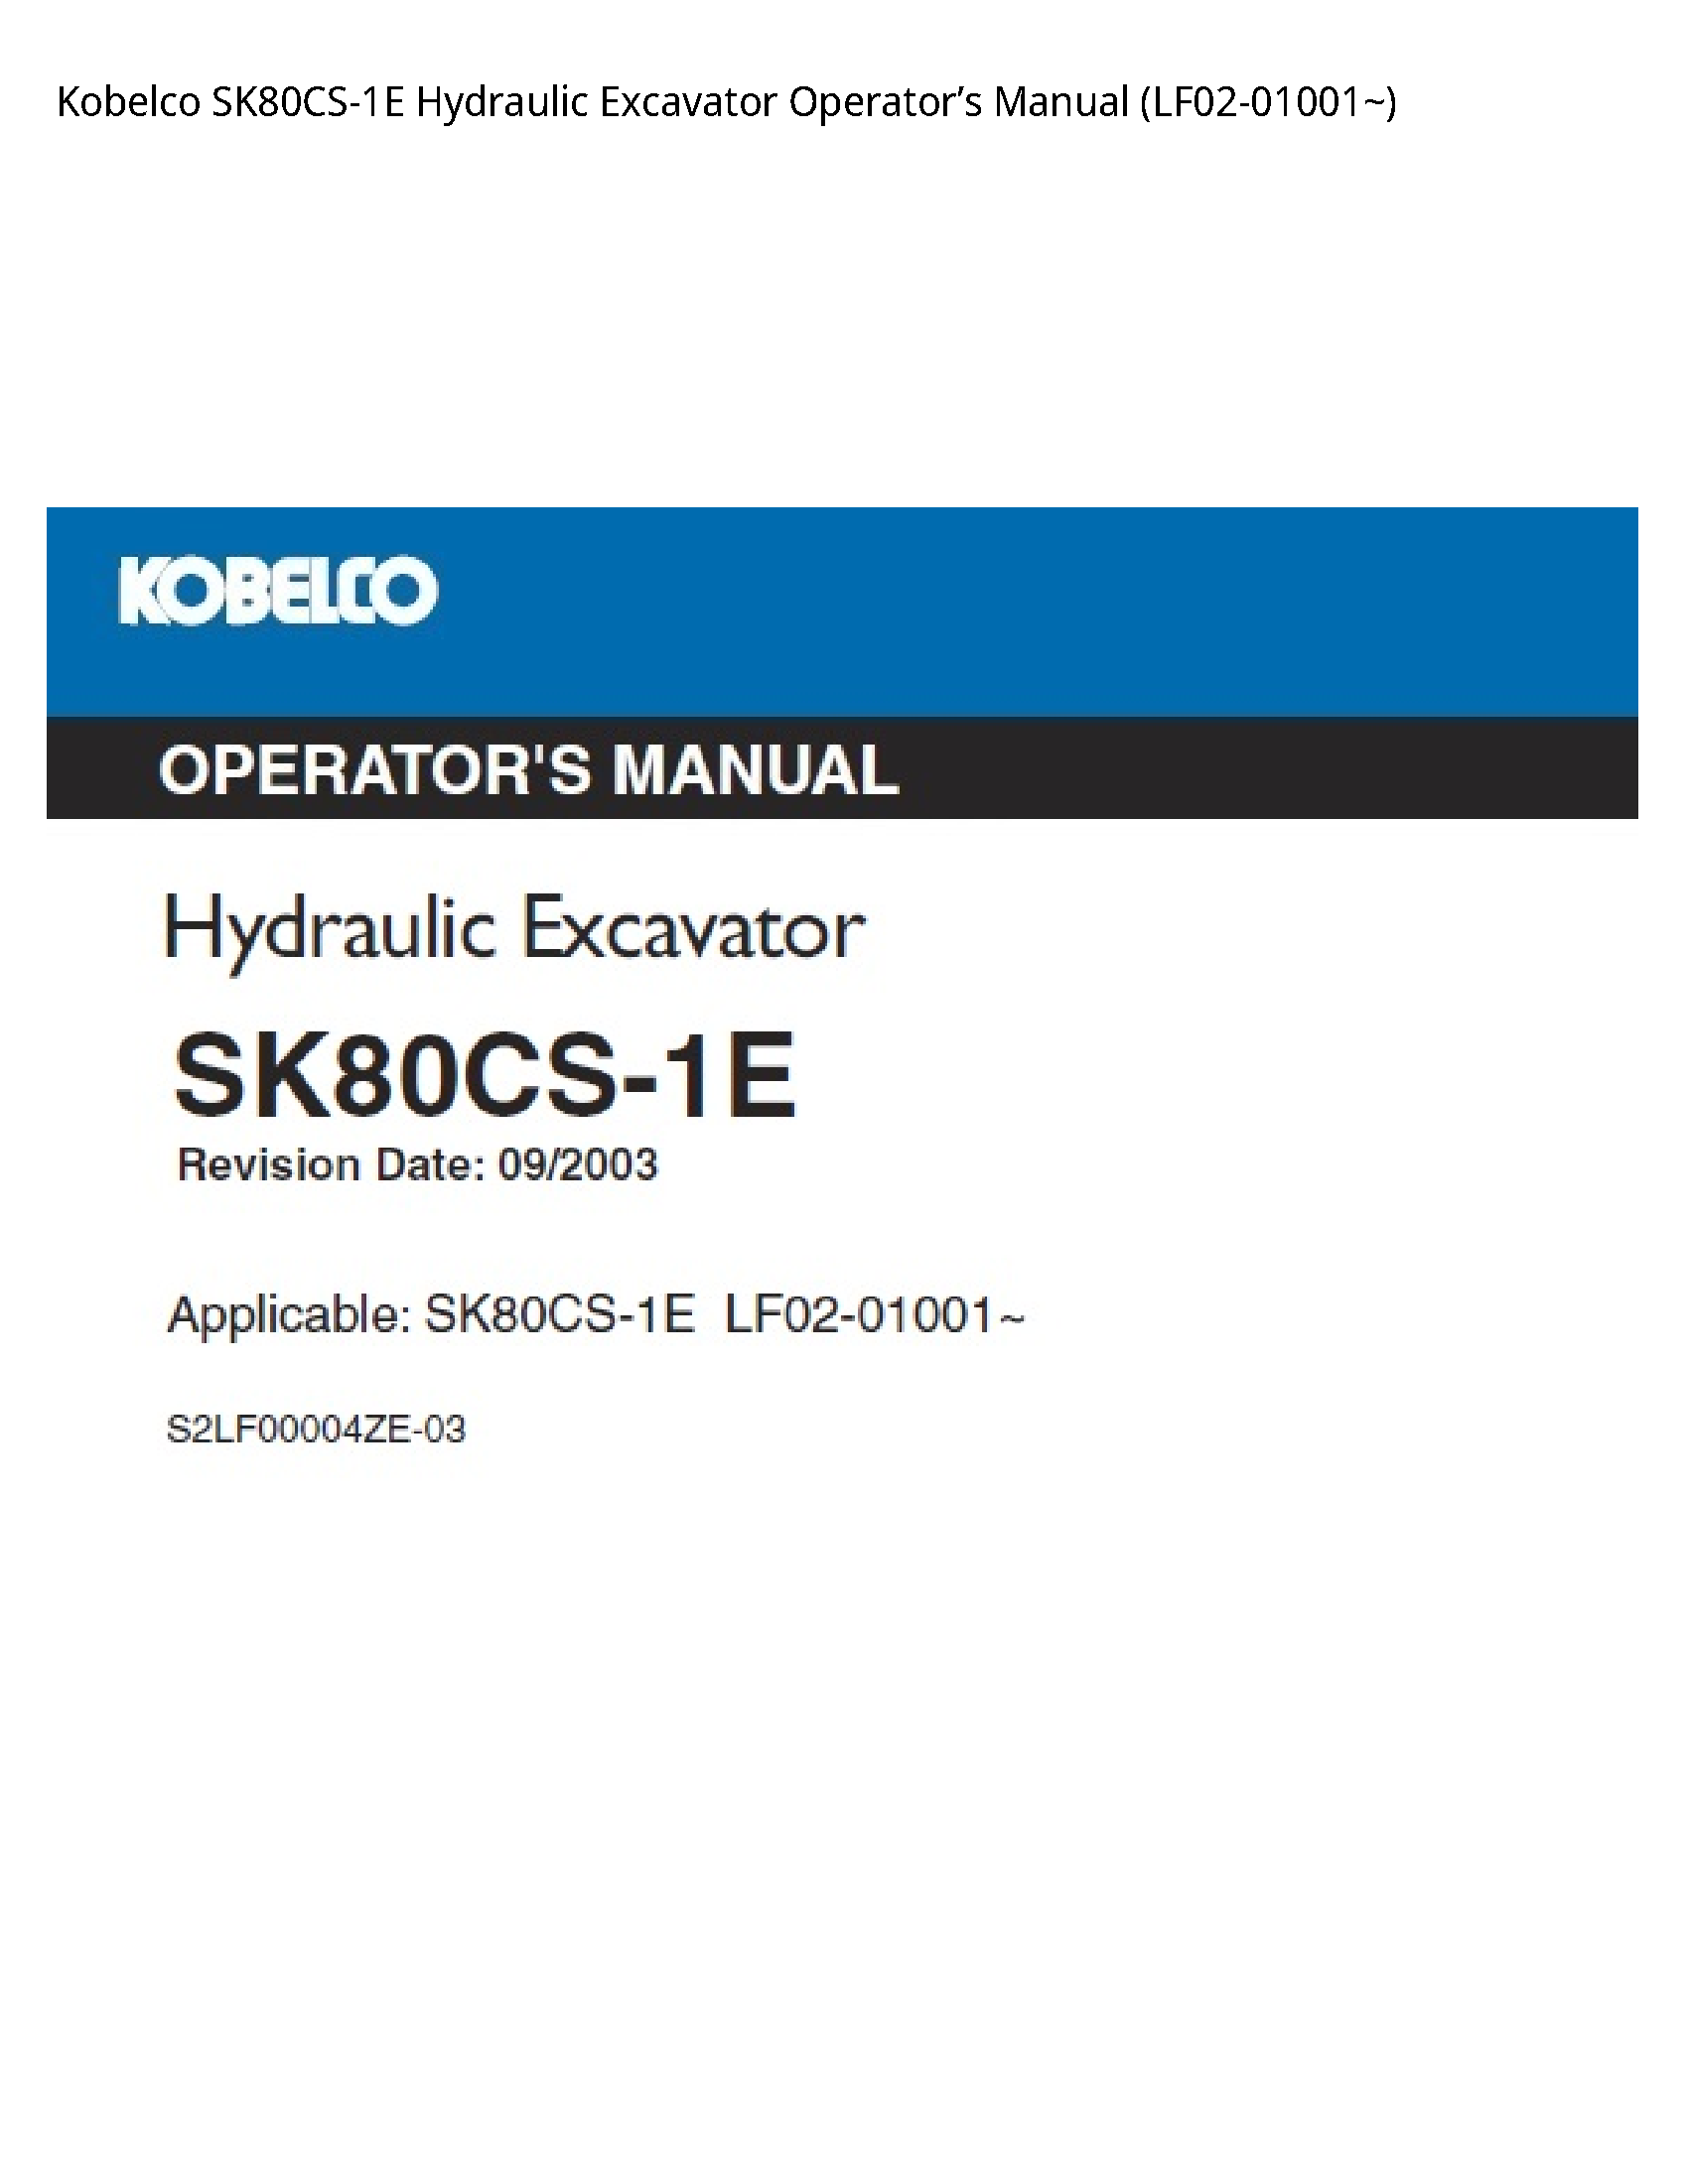 Kobelco SK80CS-1E Hydraulic Excavator Operator’s manual